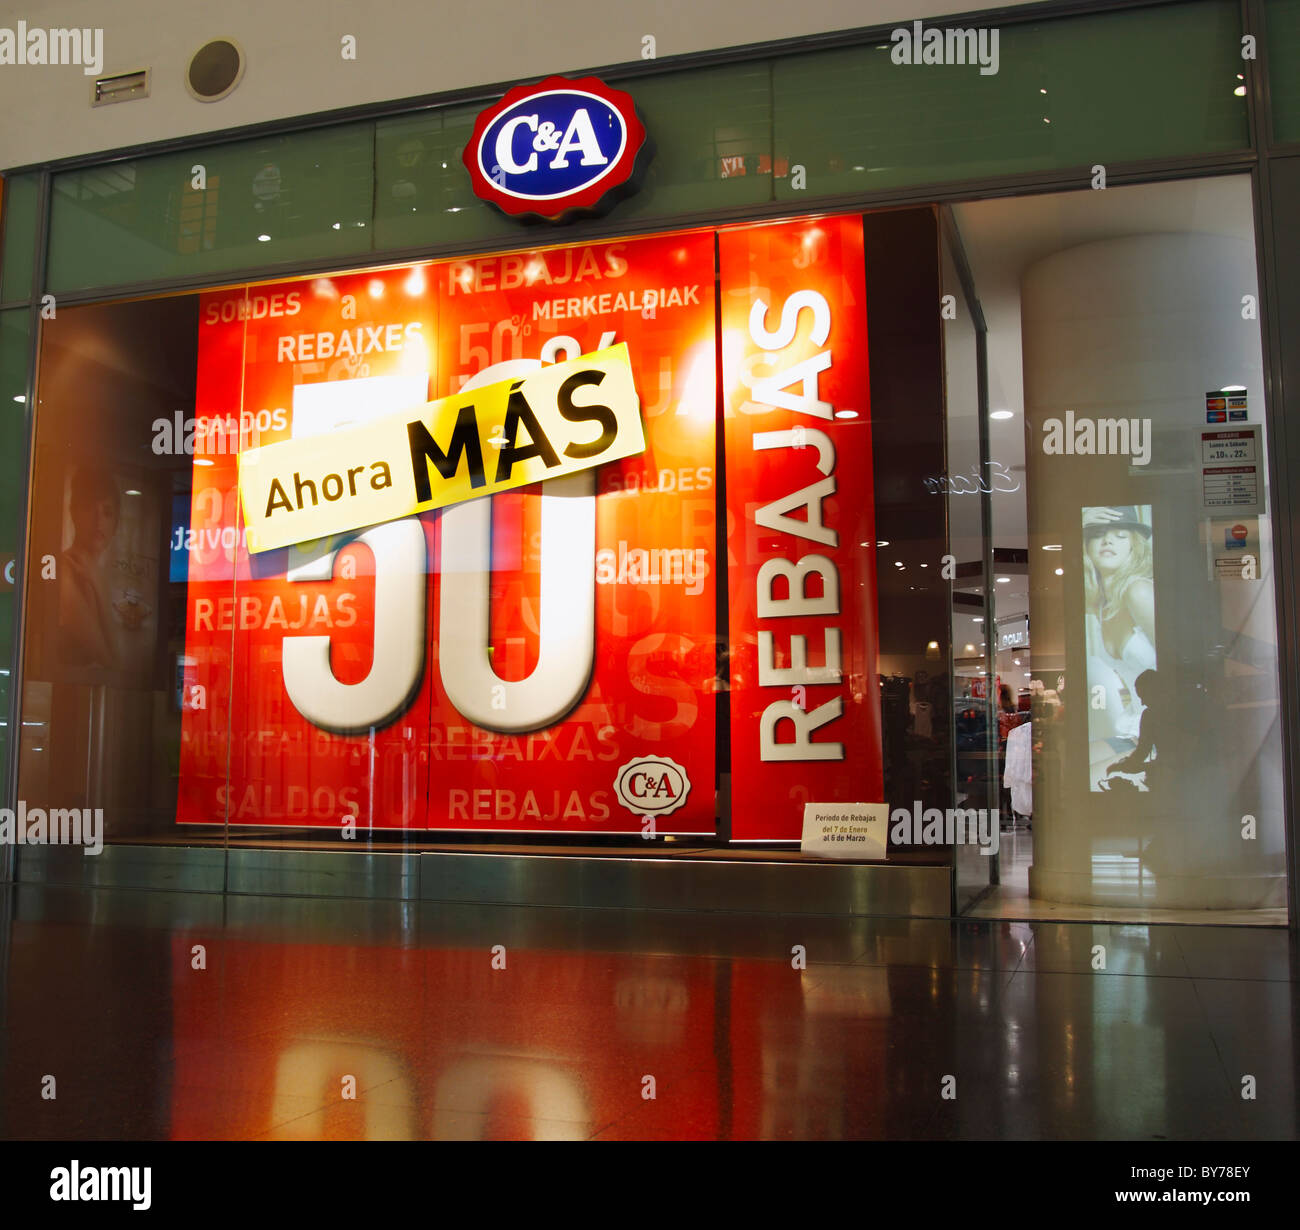 Sale sign in Spanish (Rebajas) in C&A store window in Spain Stock Photo -  Alamy